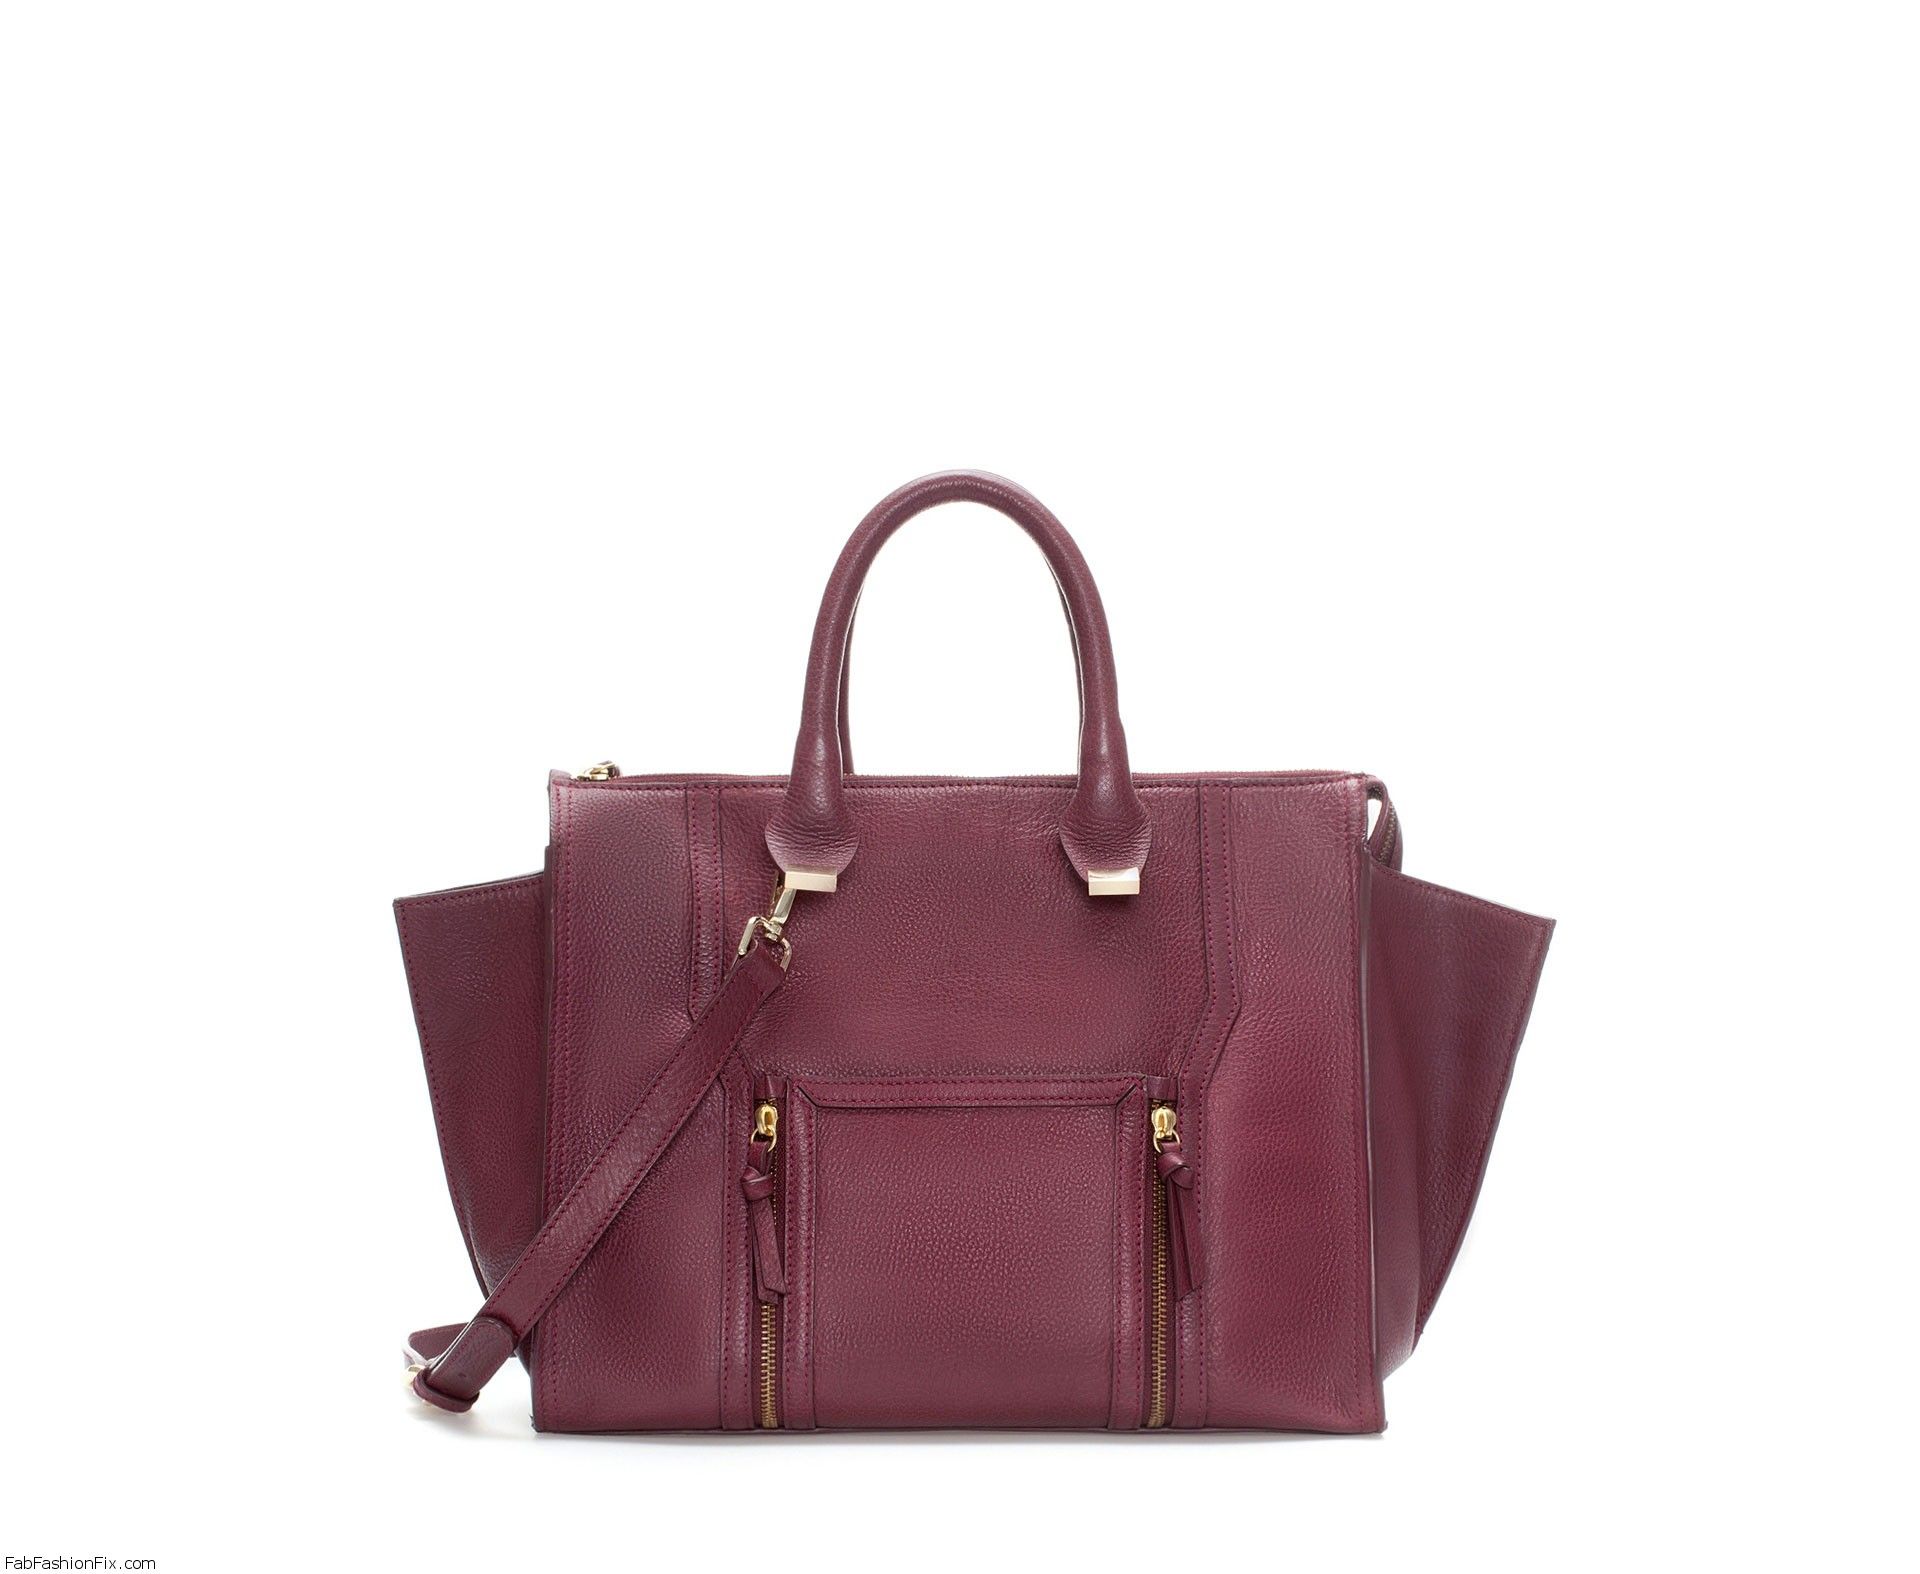 ZARA Handbags for fall/winter 2013 | Fab Fashion Fix